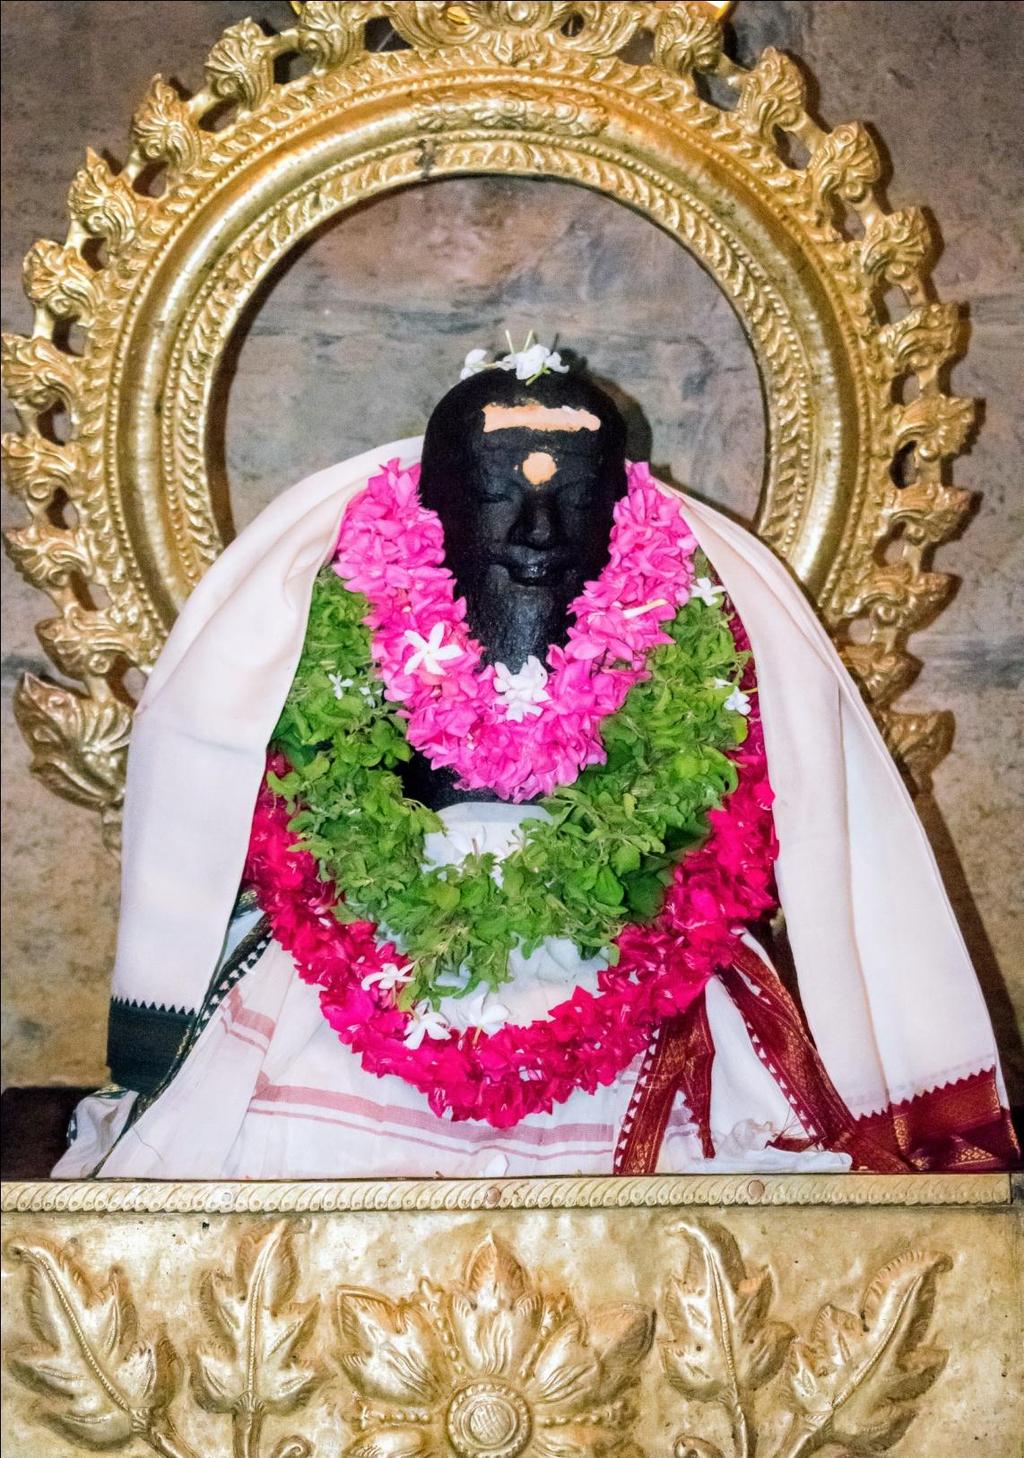 Sri Sadaguru Maha Siddhar